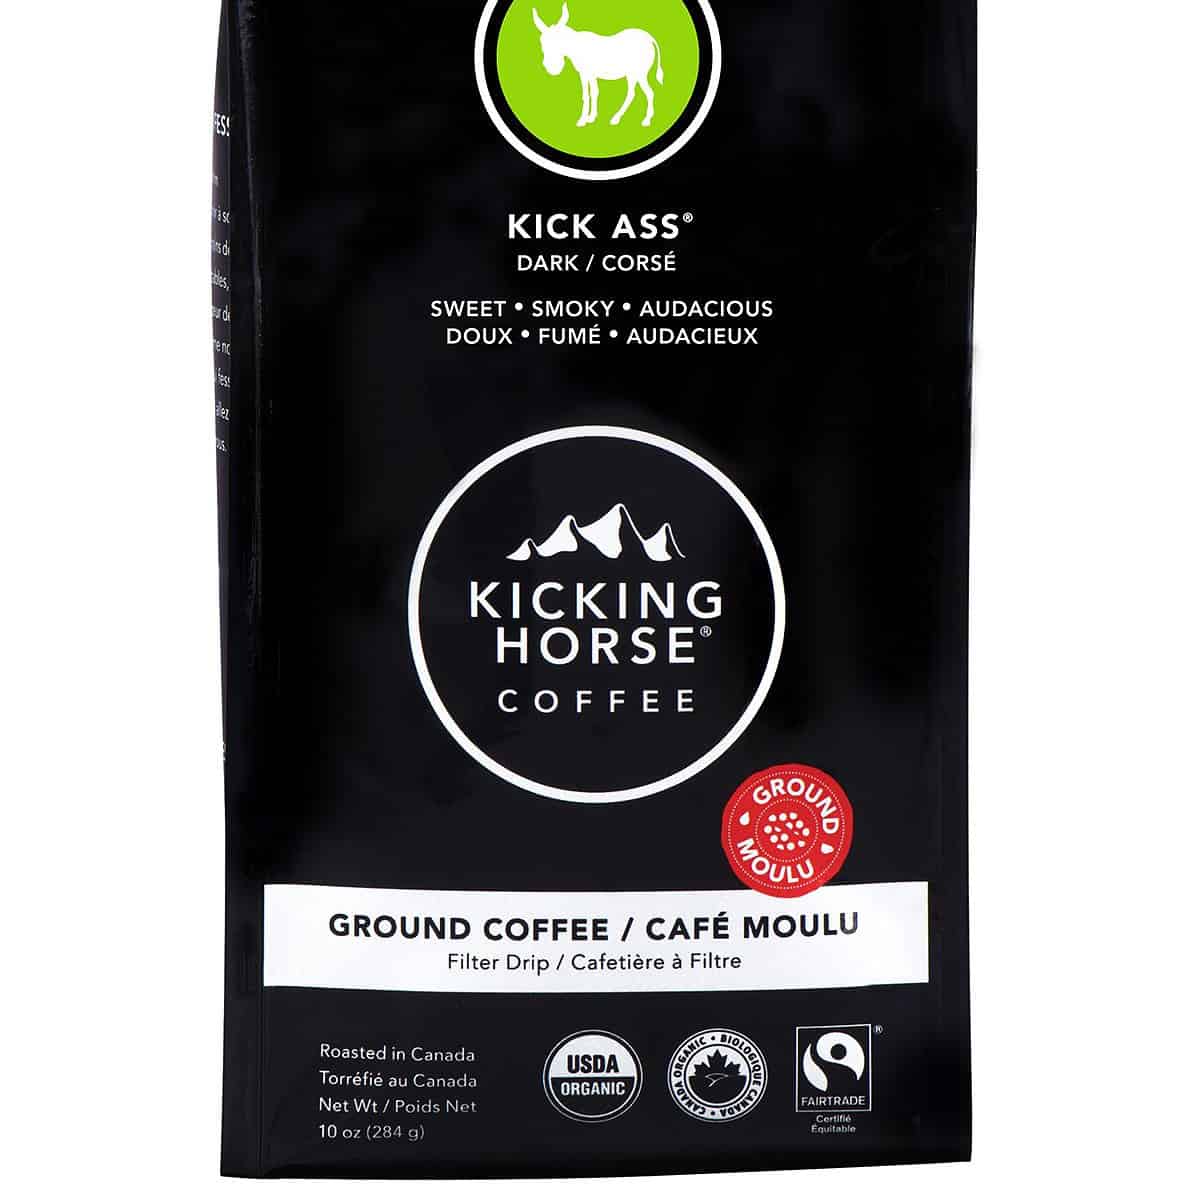 Kicking Horse Coffee- Kick Ass Dark Roast Ground